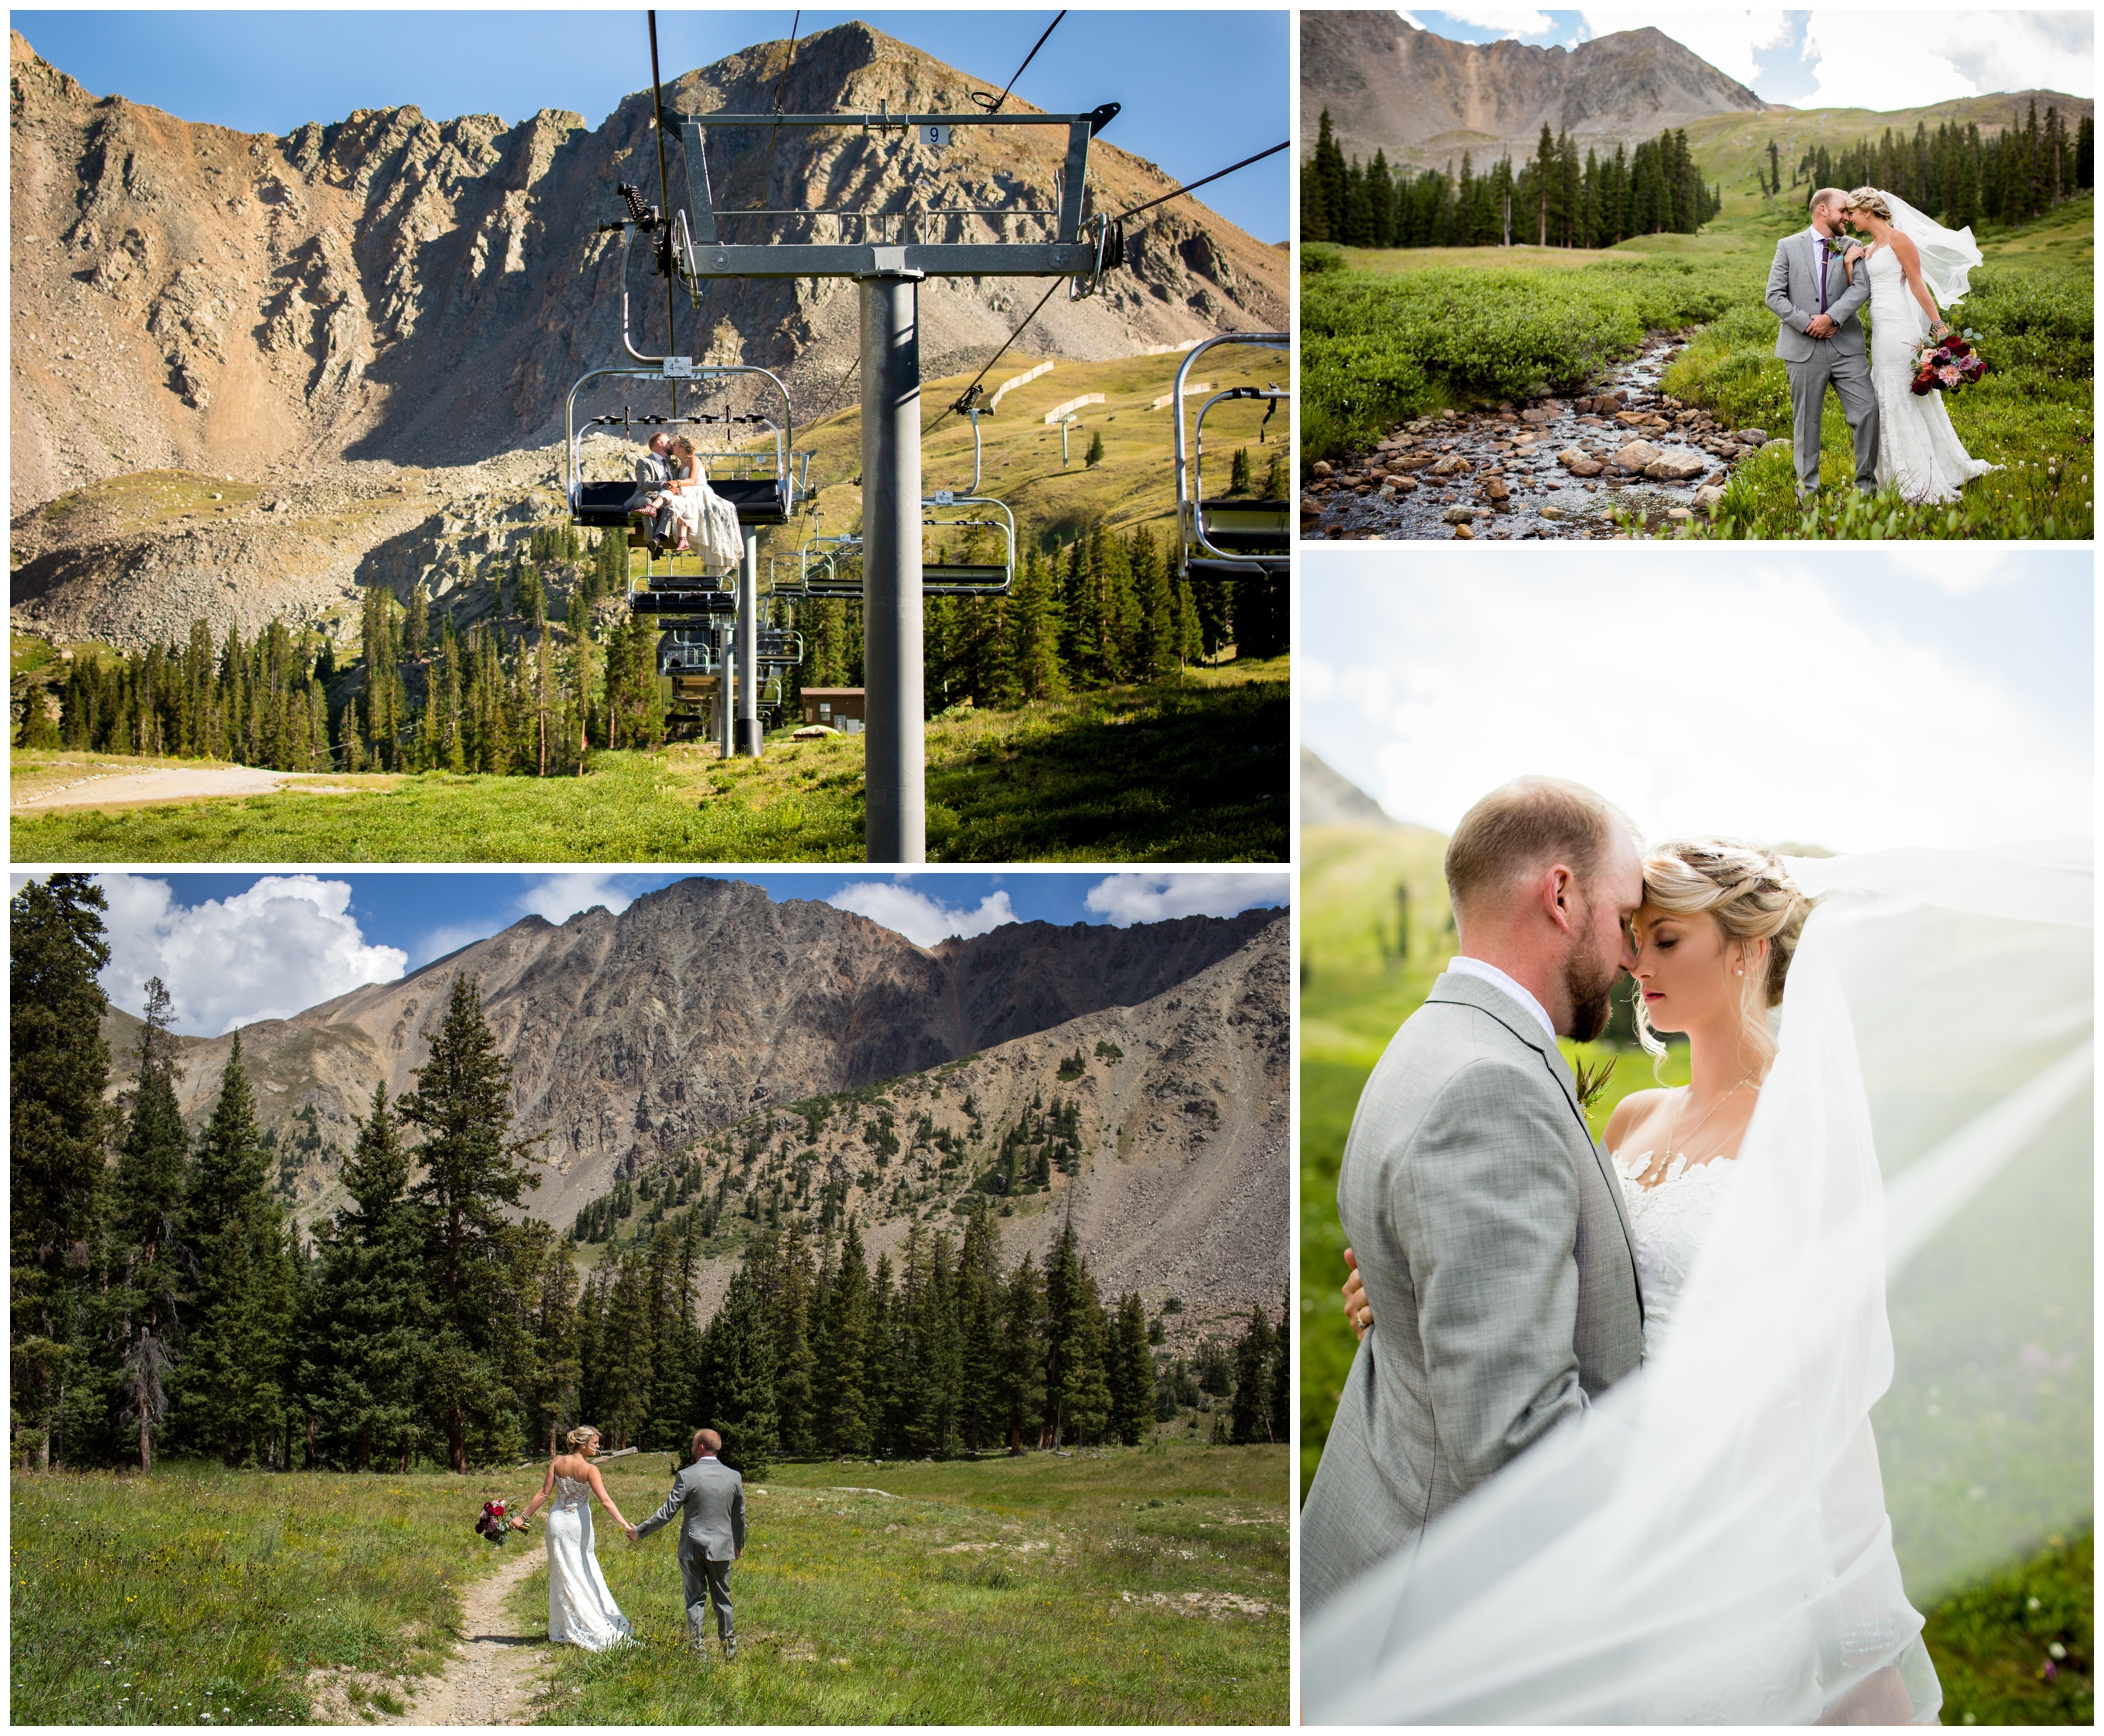 A-basin Colorado wedding photos by Plum Pretty Photography 